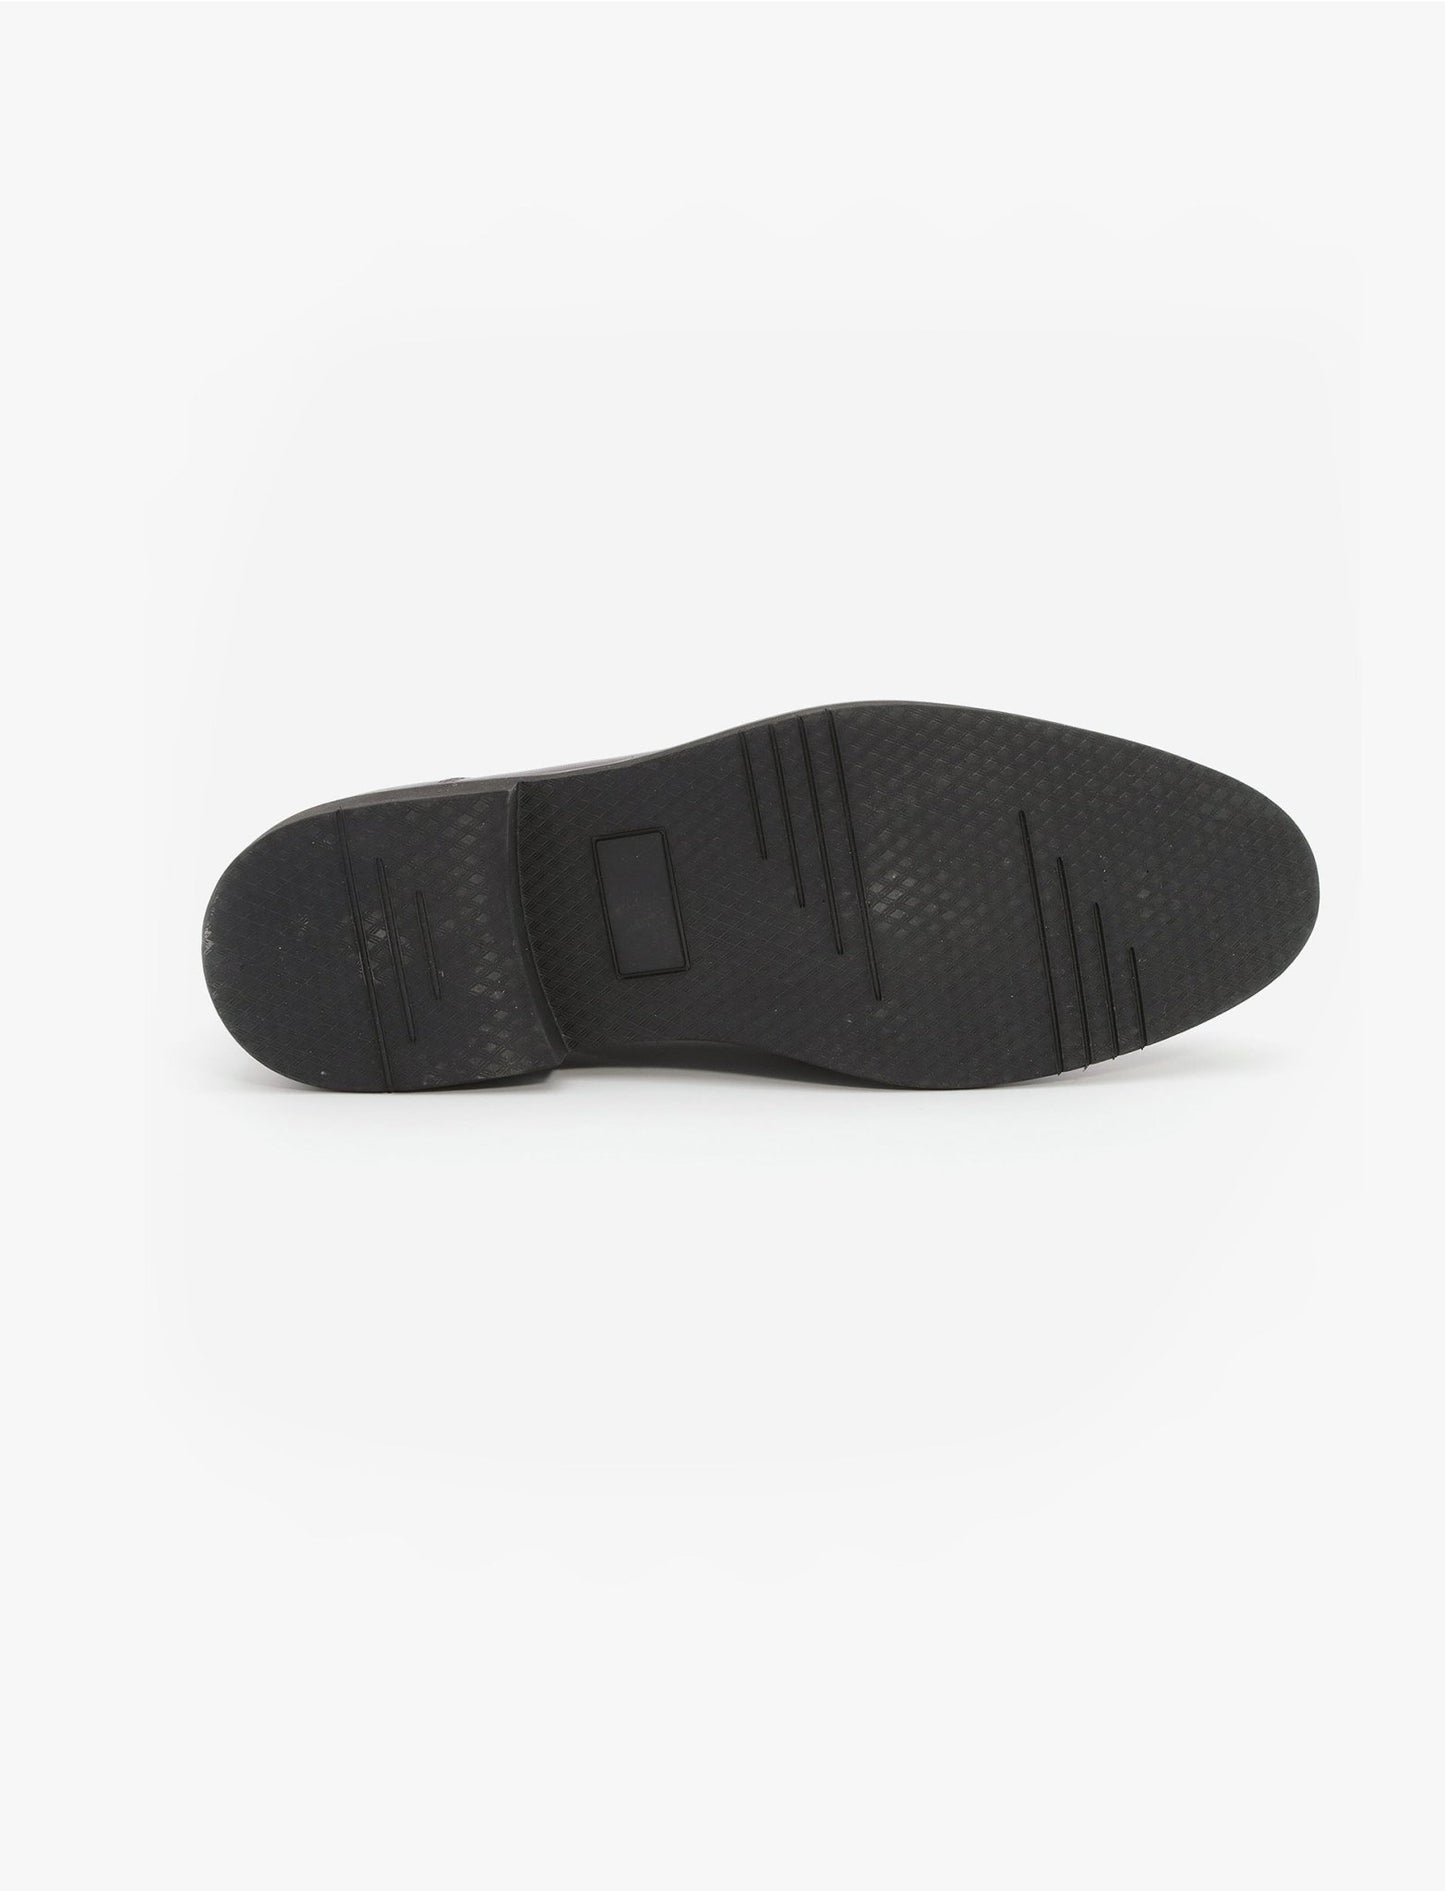 TRAK - נעליים אלגנטיות לגבר דגם ערן בצבע שחור - MASHBIR//365